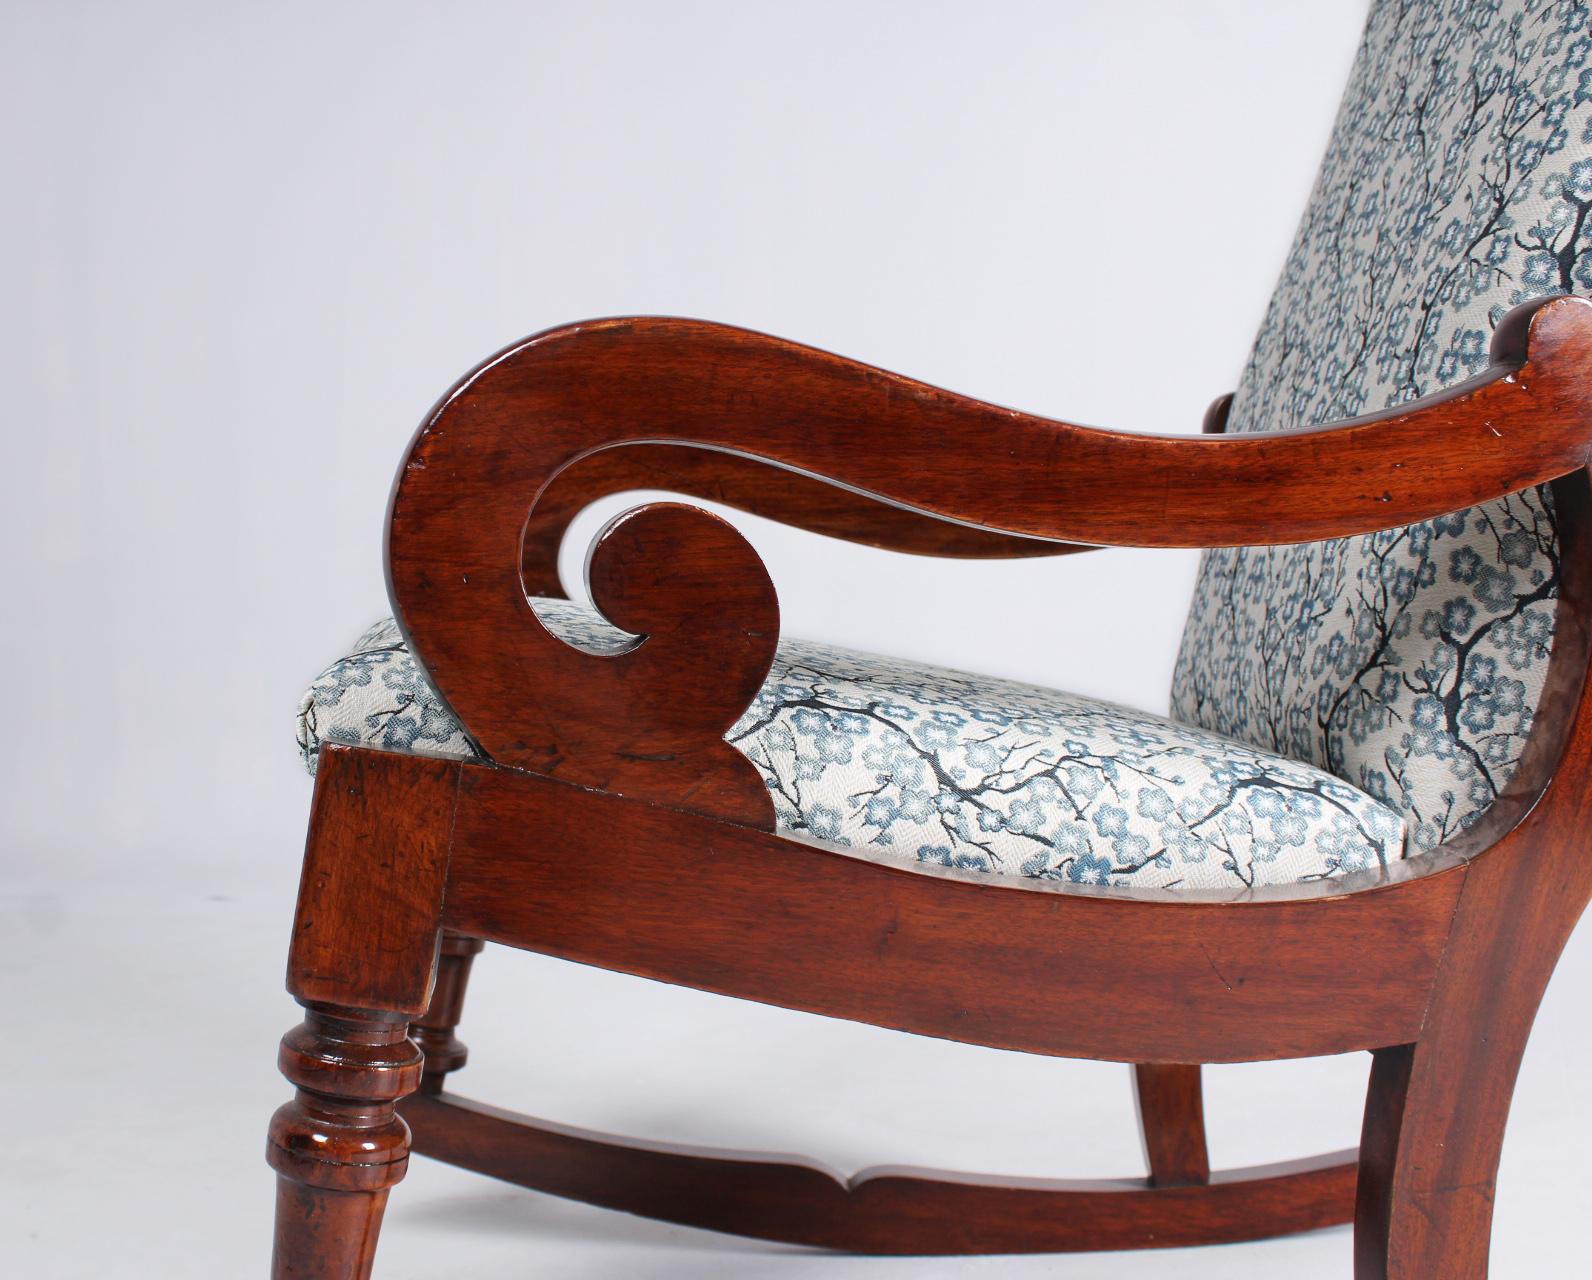 19th century rocking chair